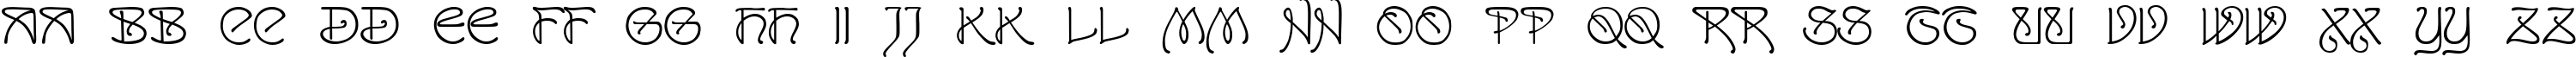 Пример написания английского алфавита шрифтом San Remo